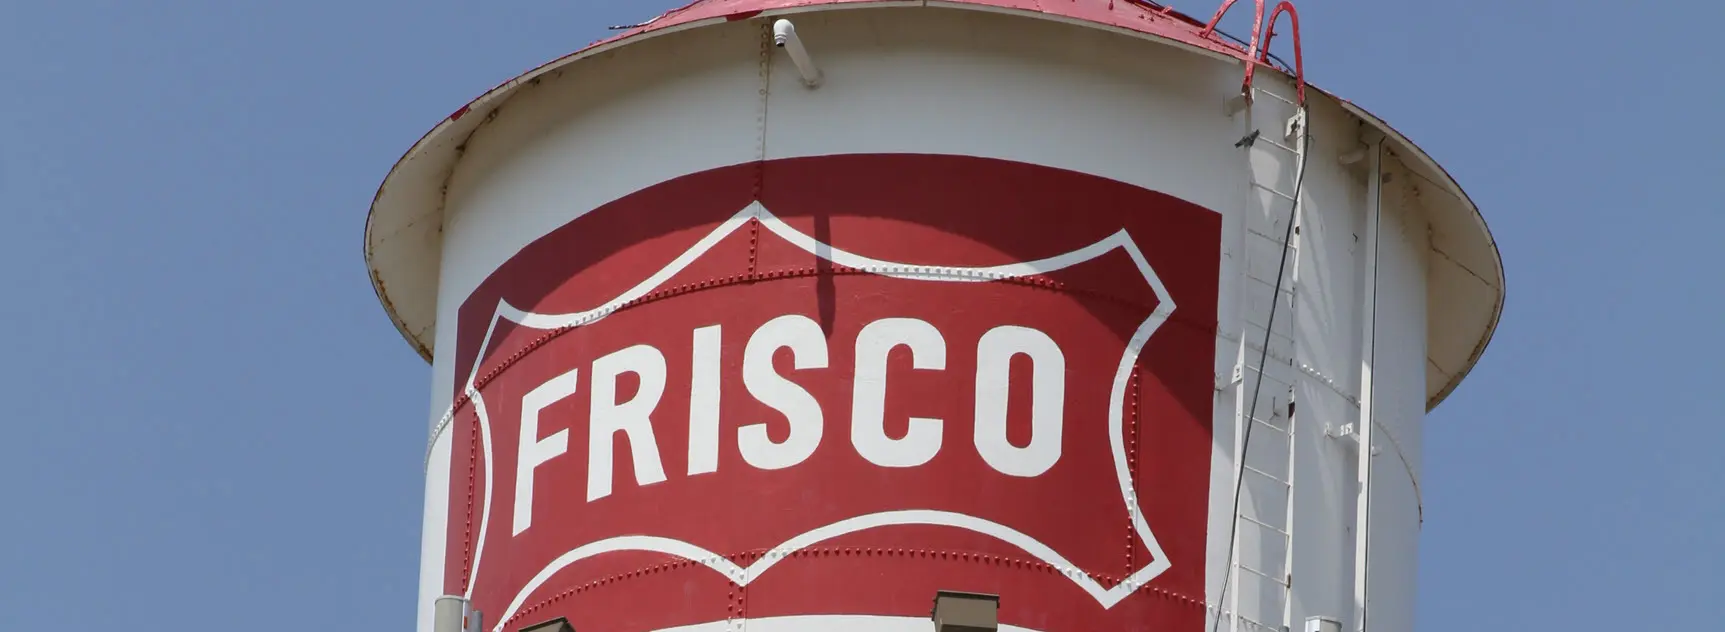 Frisco, TX Real Estate, Homes & Condos For Sale